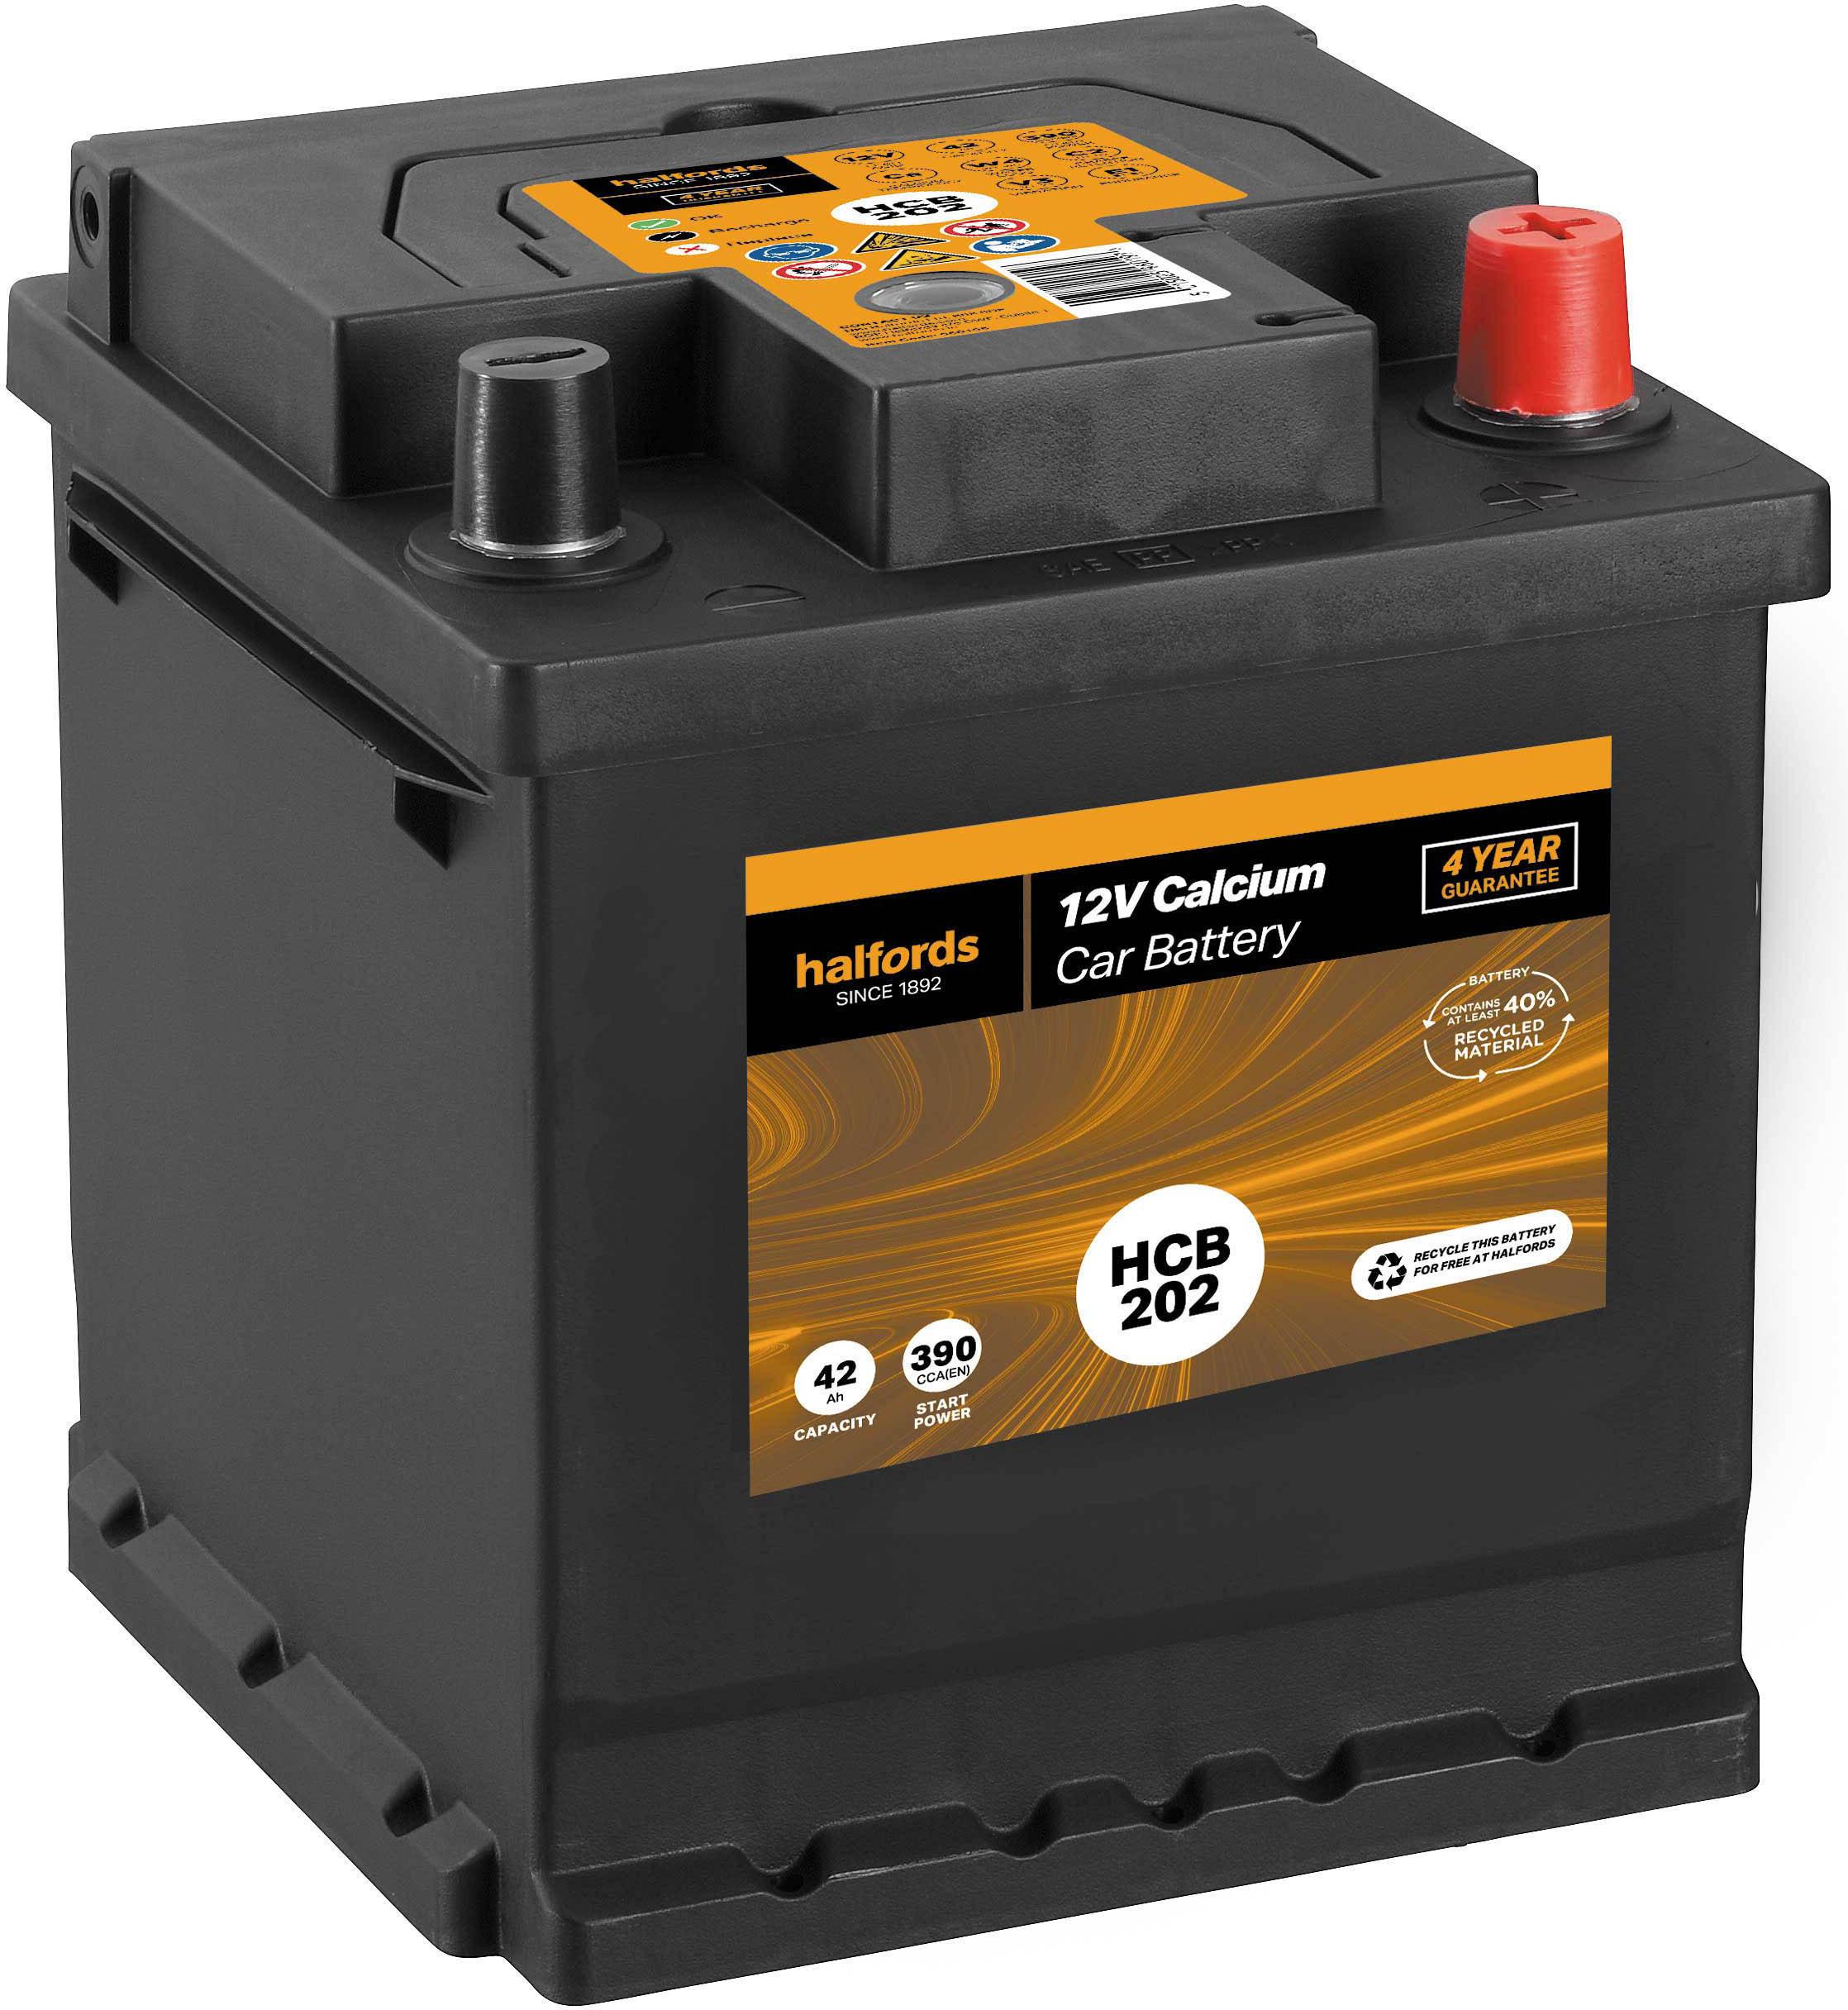 Halfords Hb202 Lead Acid 12V Car Battery 3 Year Guarantee